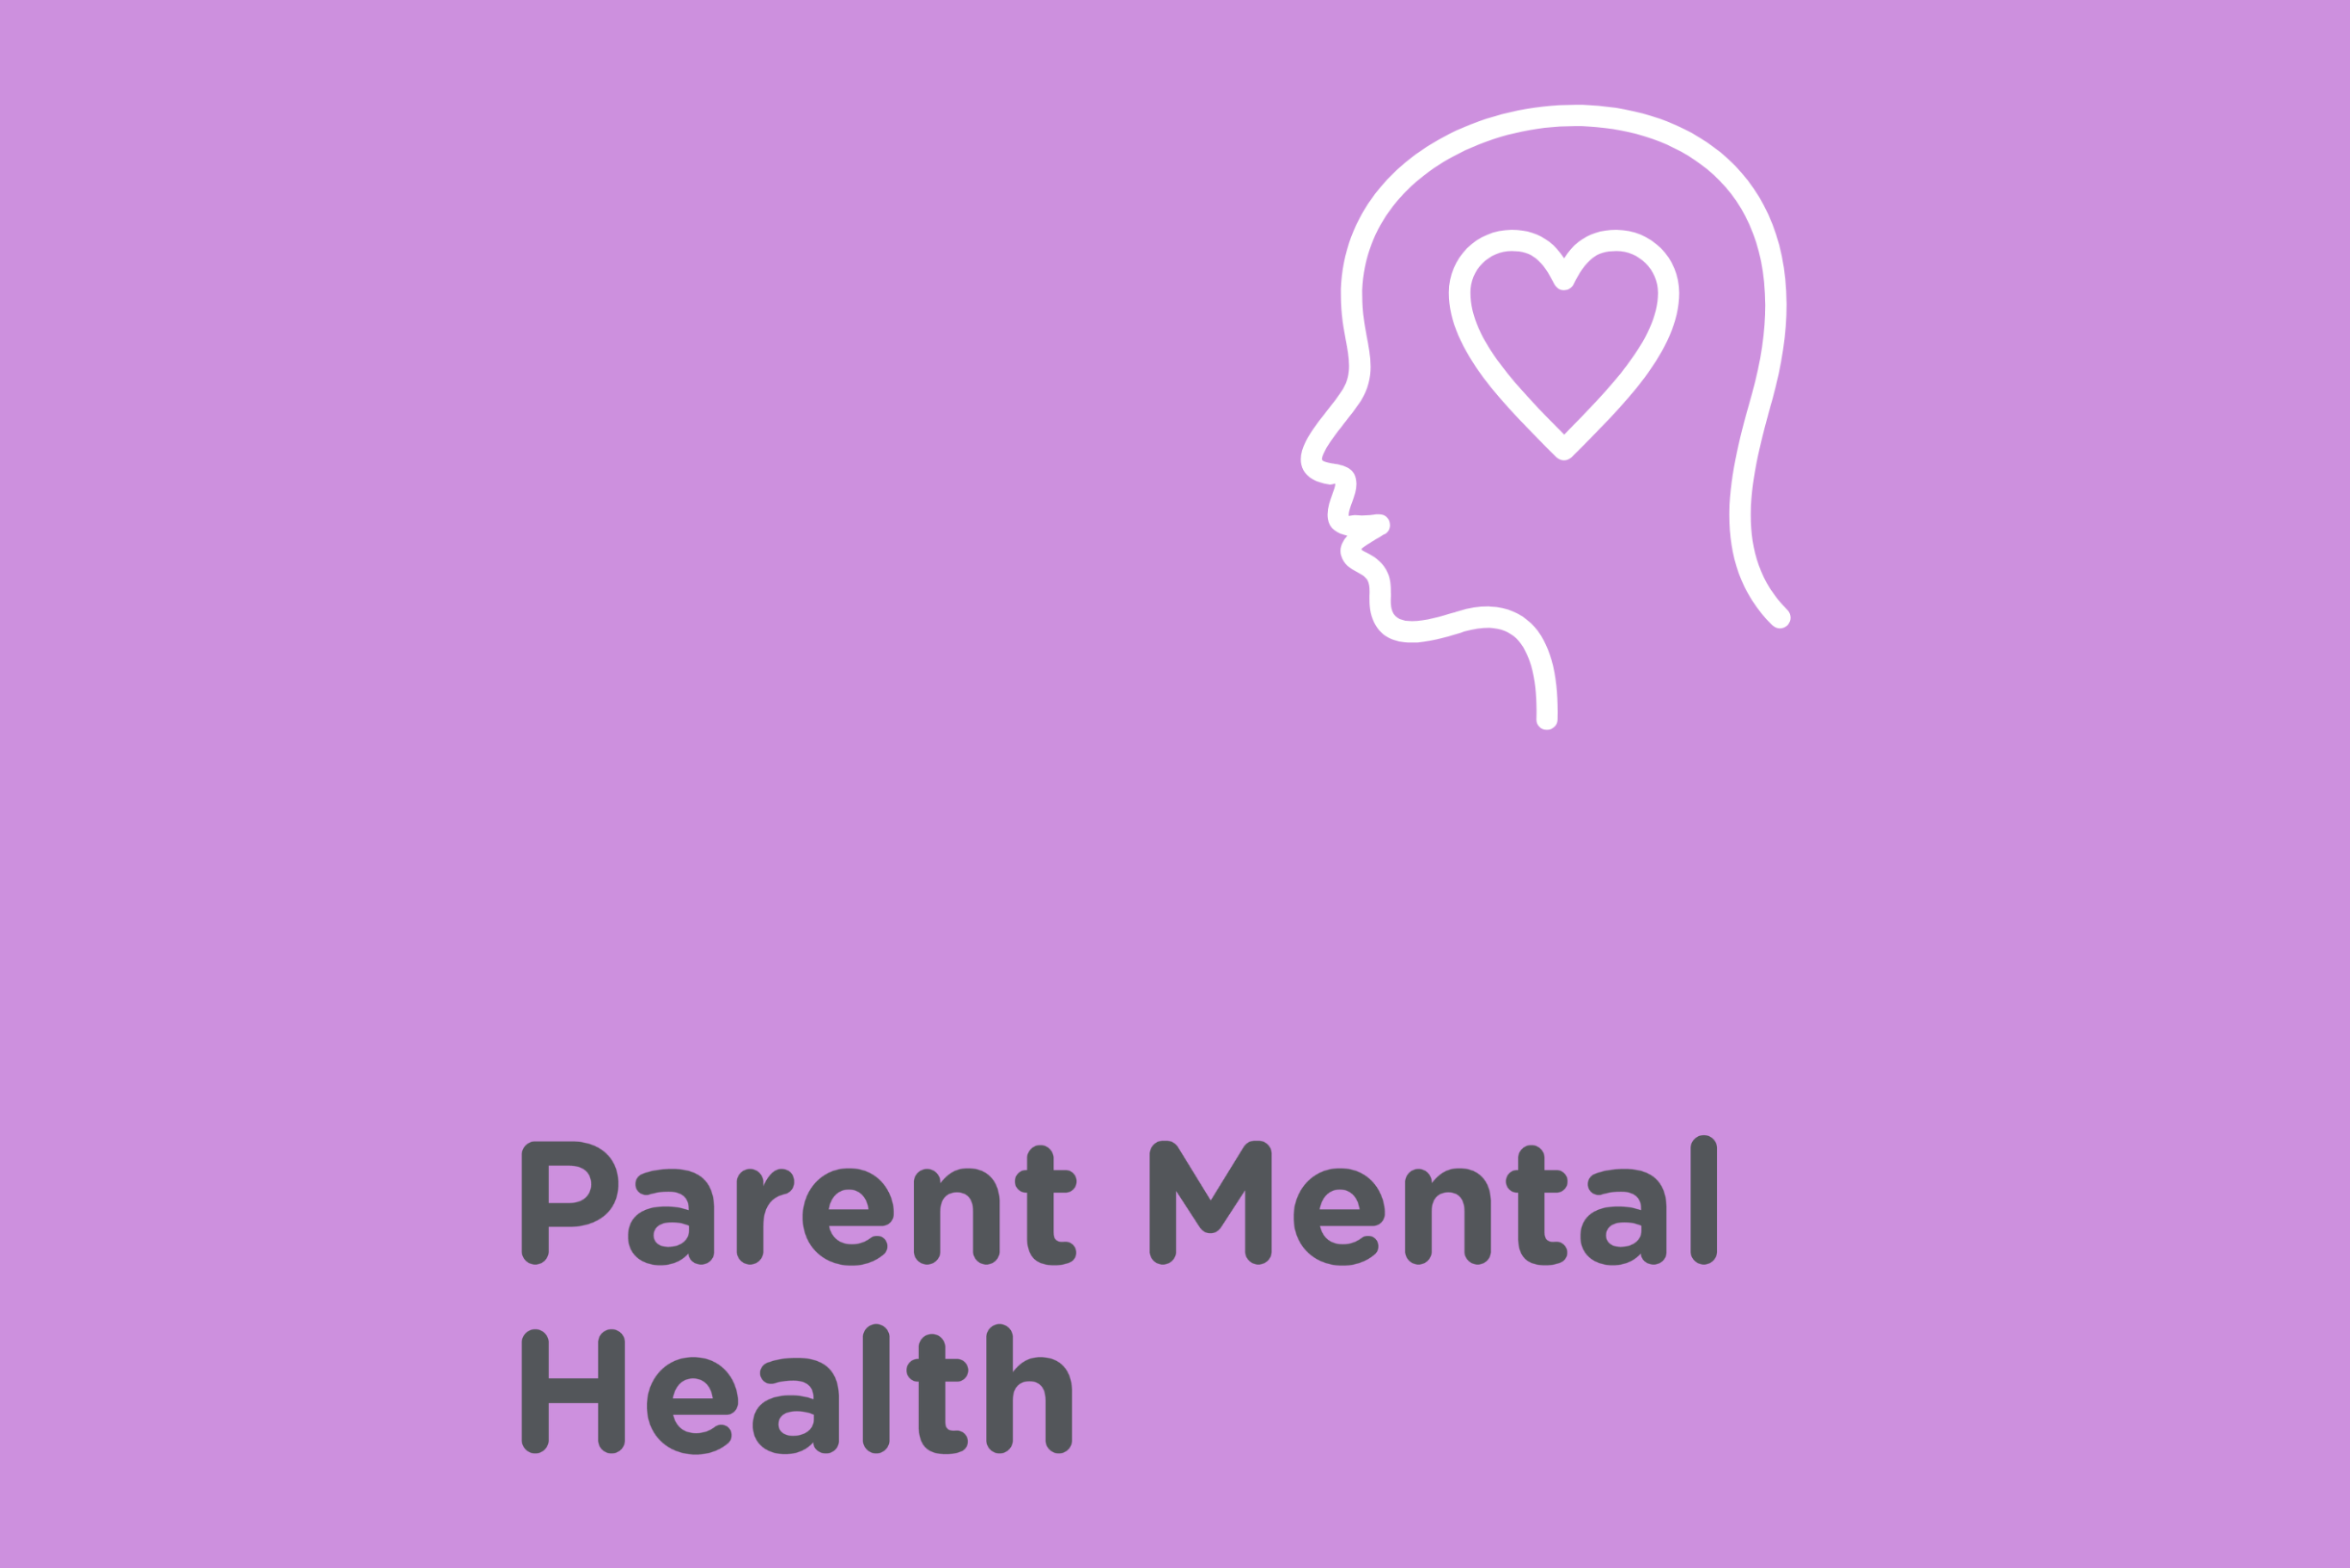 Parent mental health